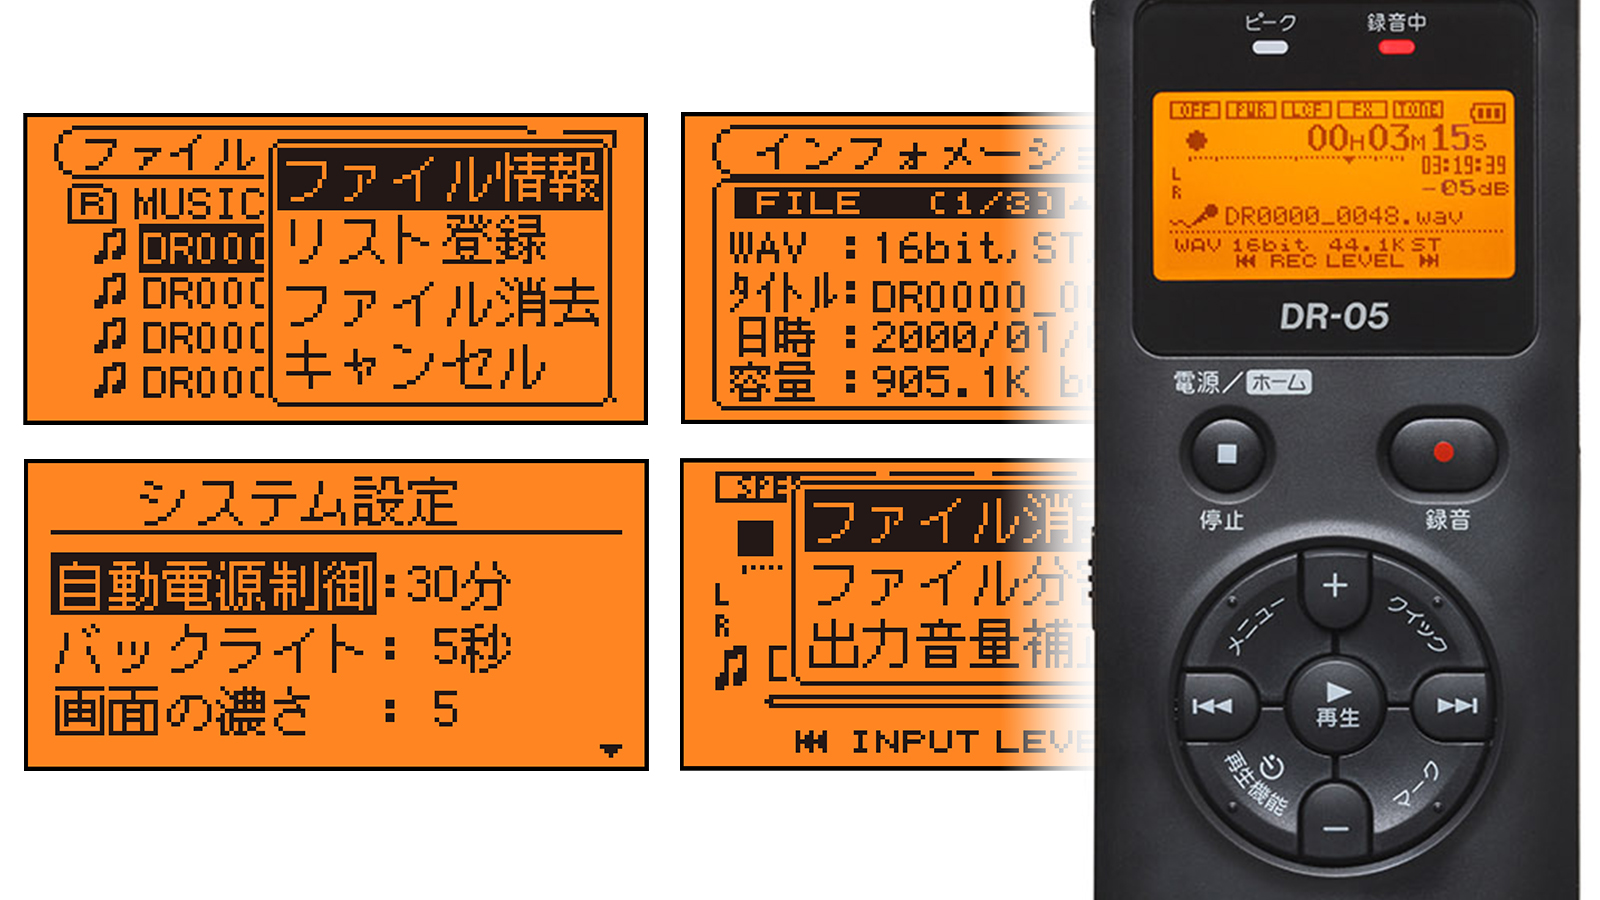 DR-05 | リニアPCMレコーダー | TASCAM (日本)